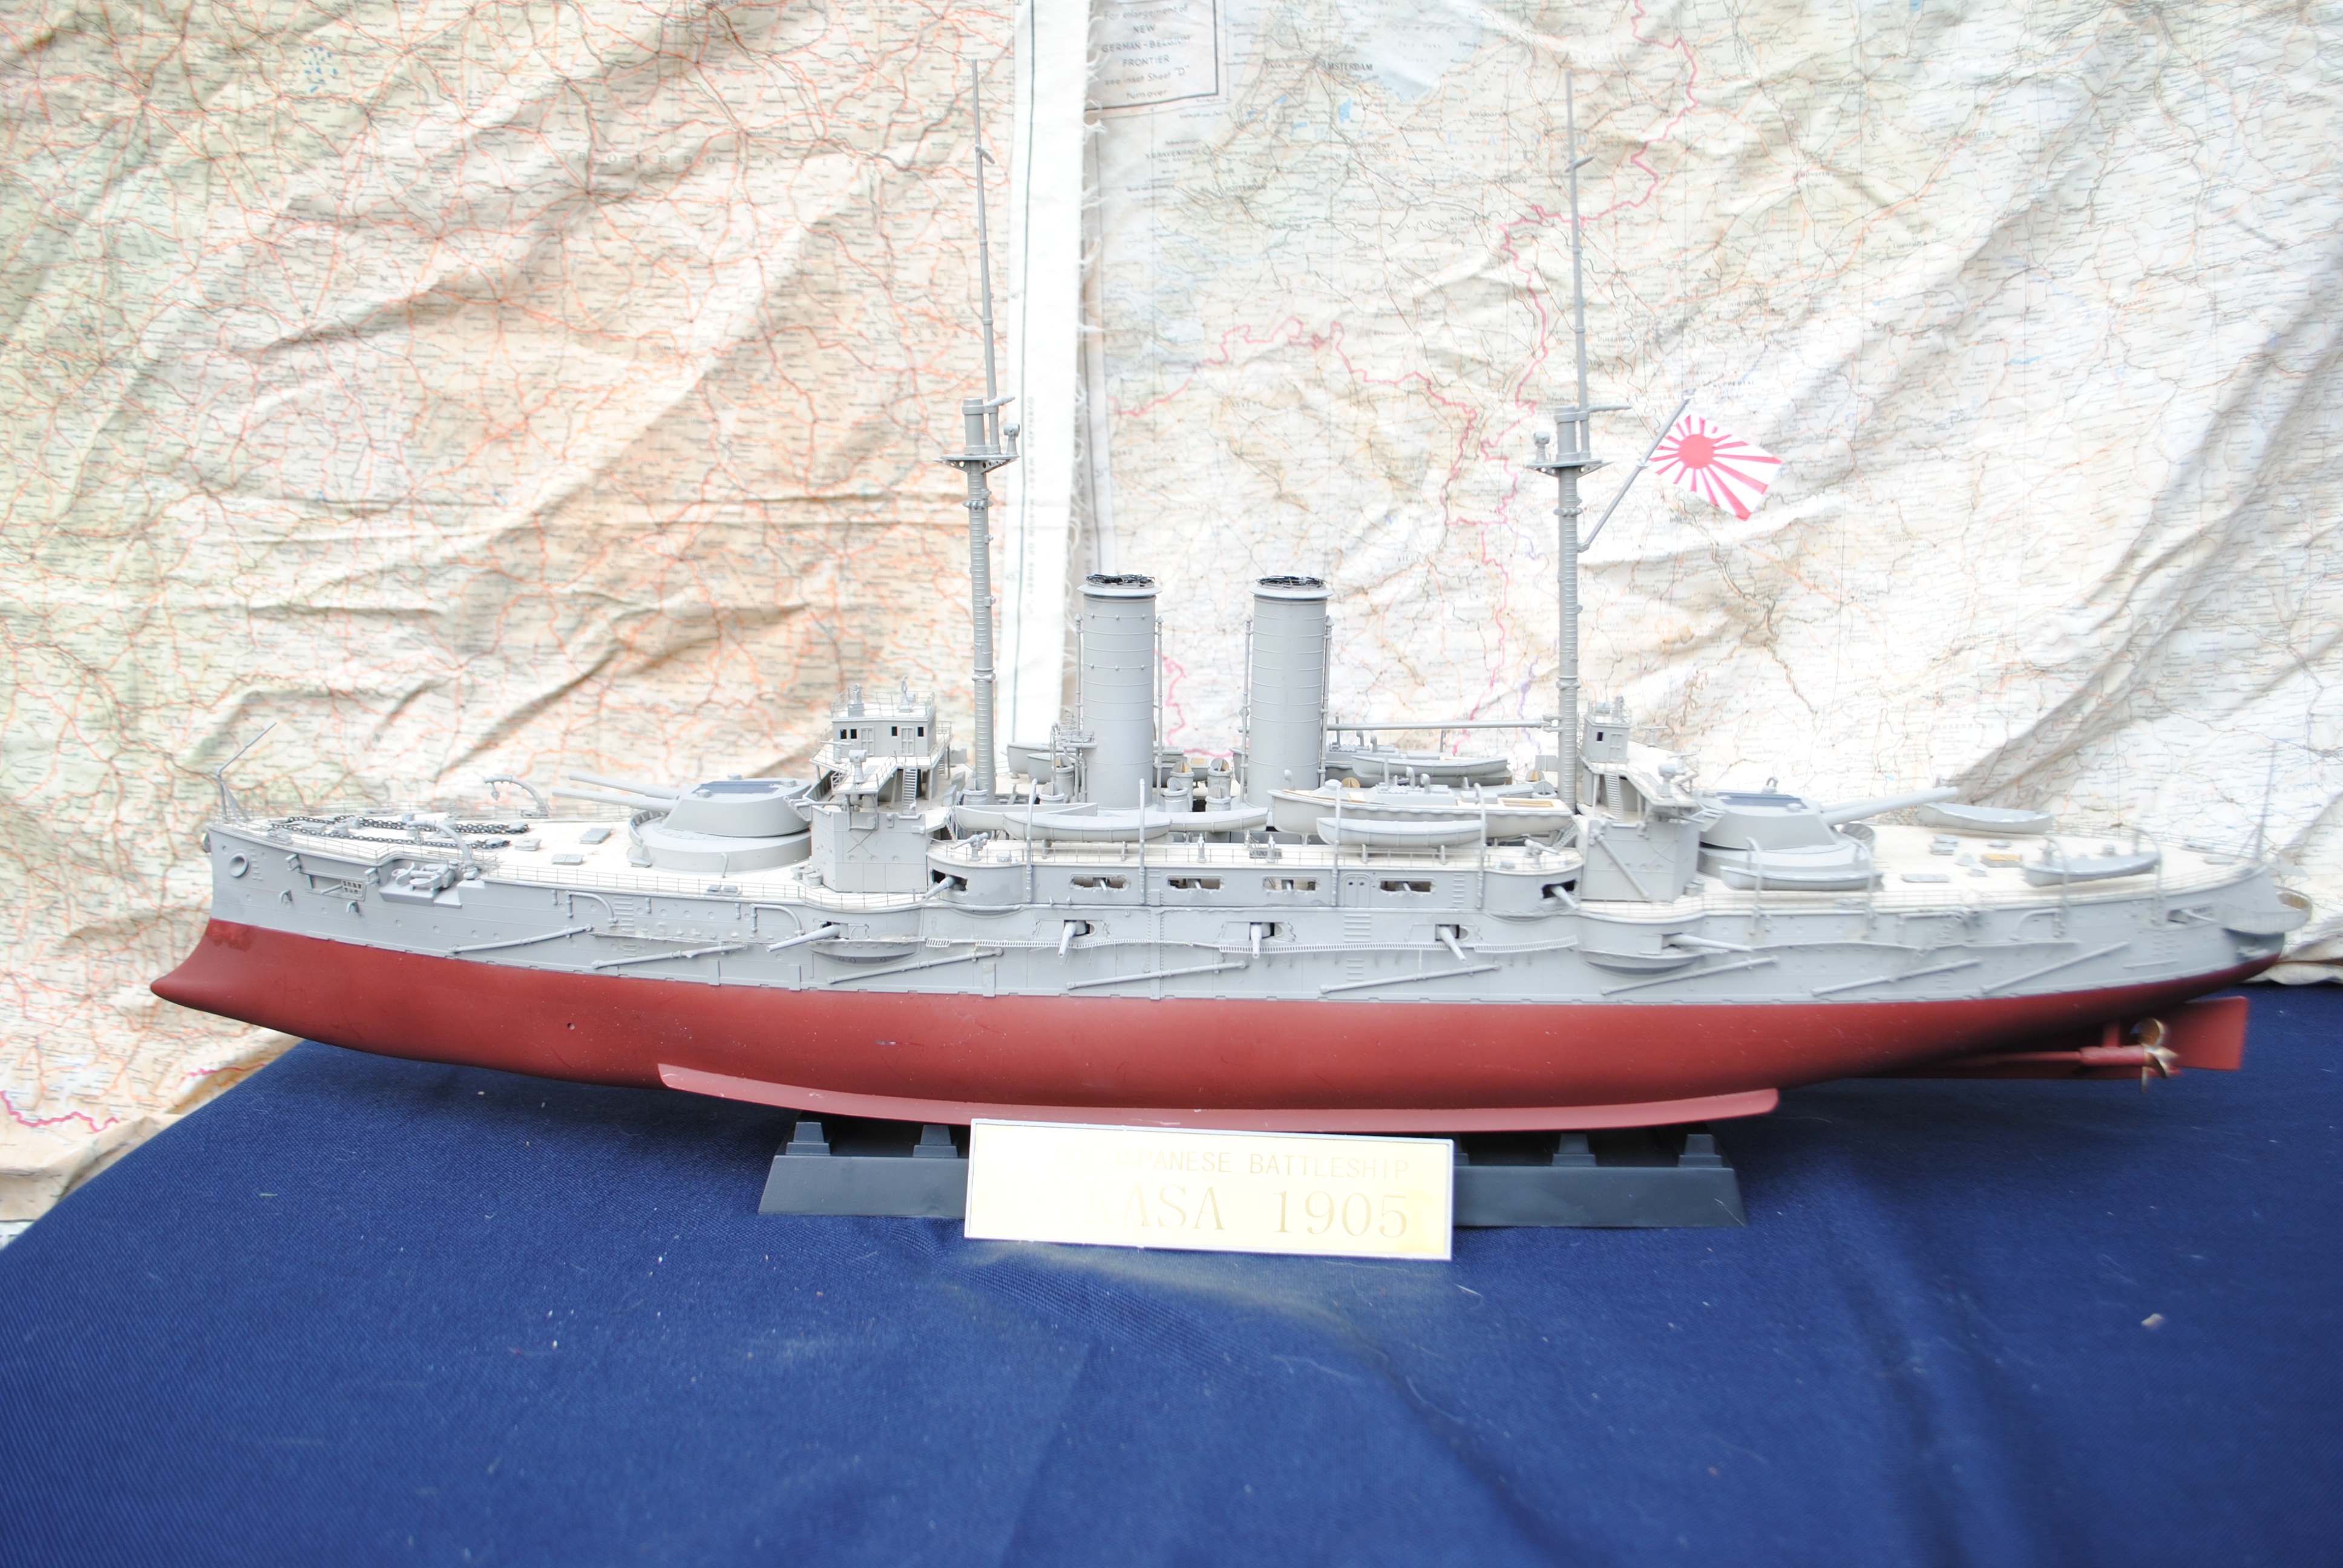 Merit ME62004 Japanese Battleschip MIKASA 1905